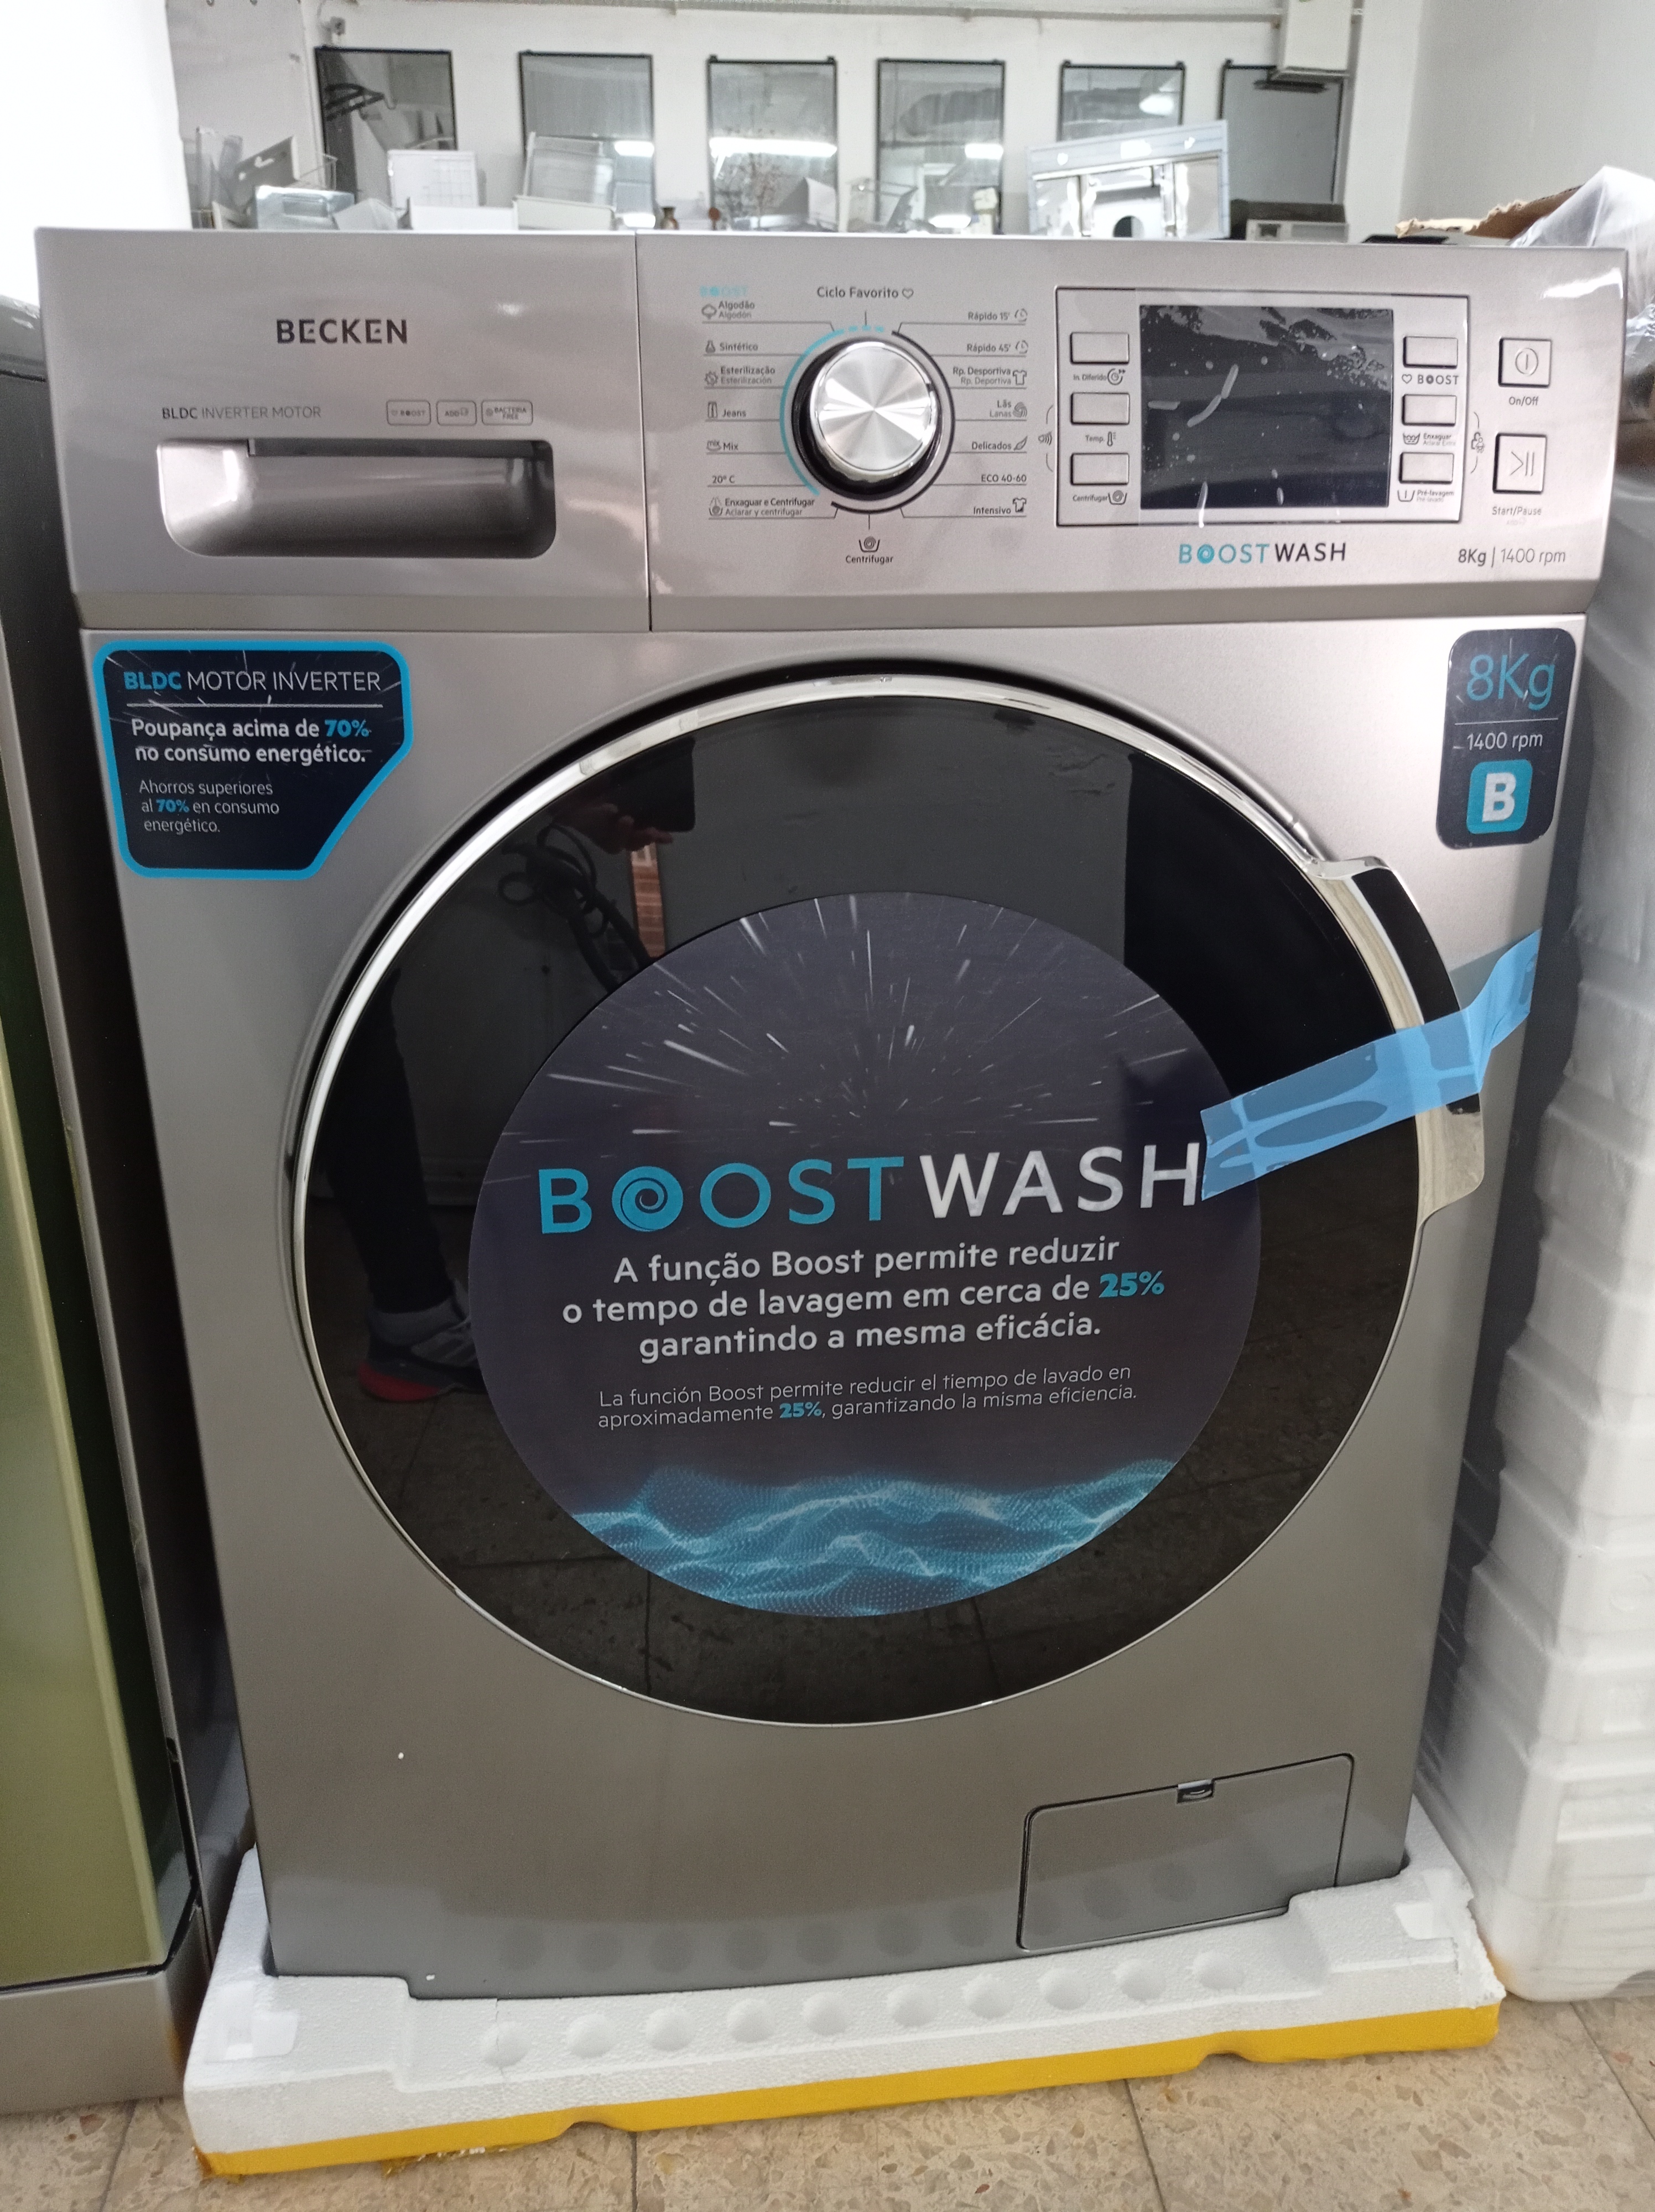 Máquina de lavar roupa Becken 390,00€